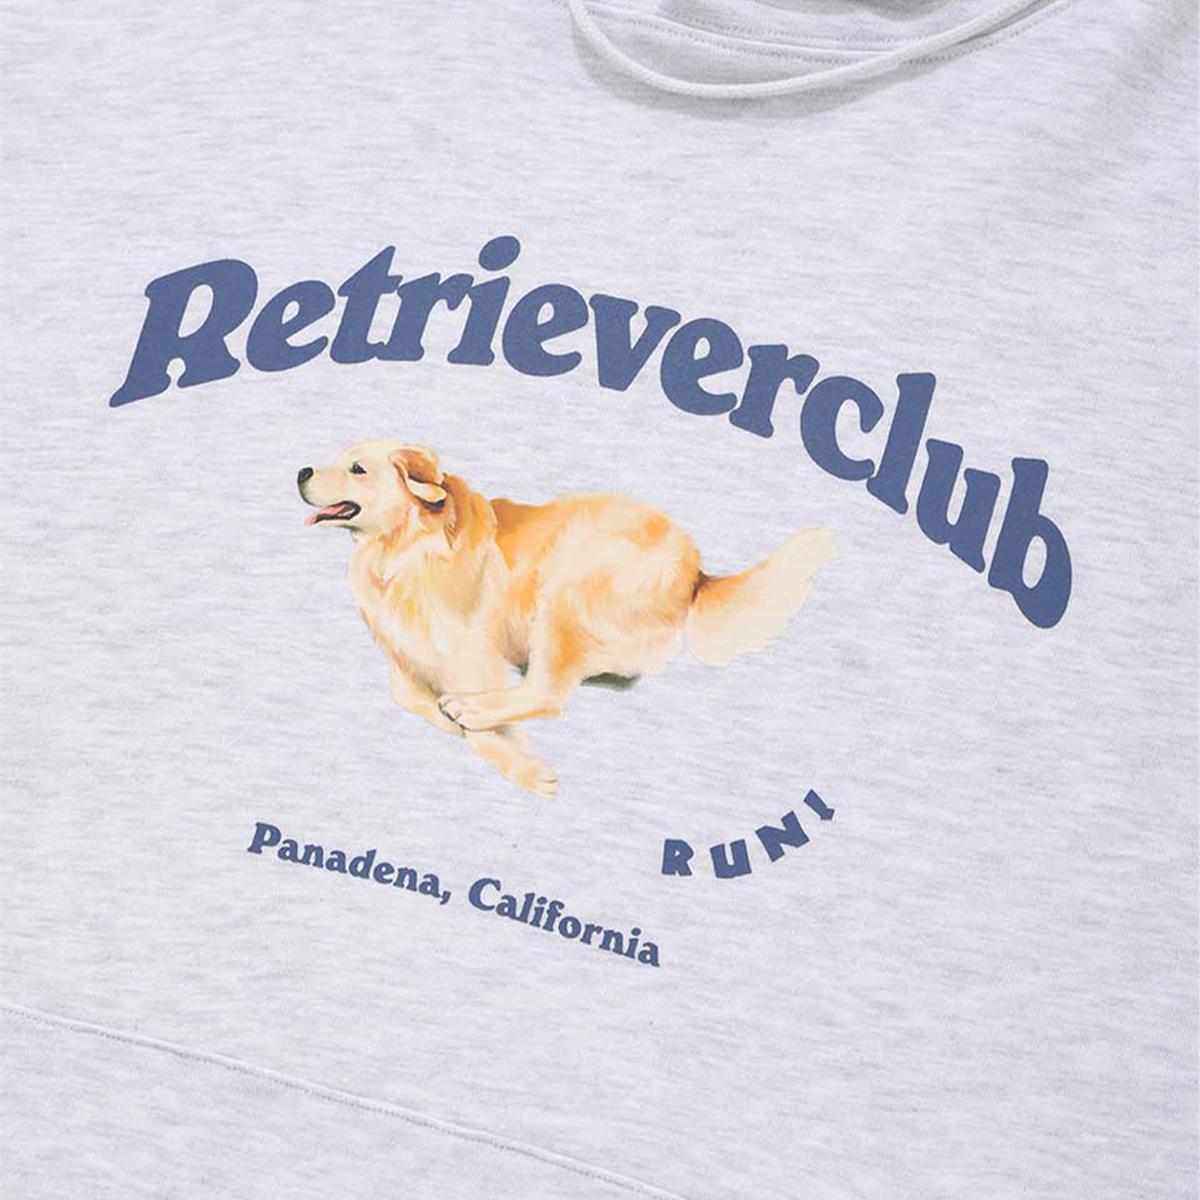 RETRIEVER CLUB